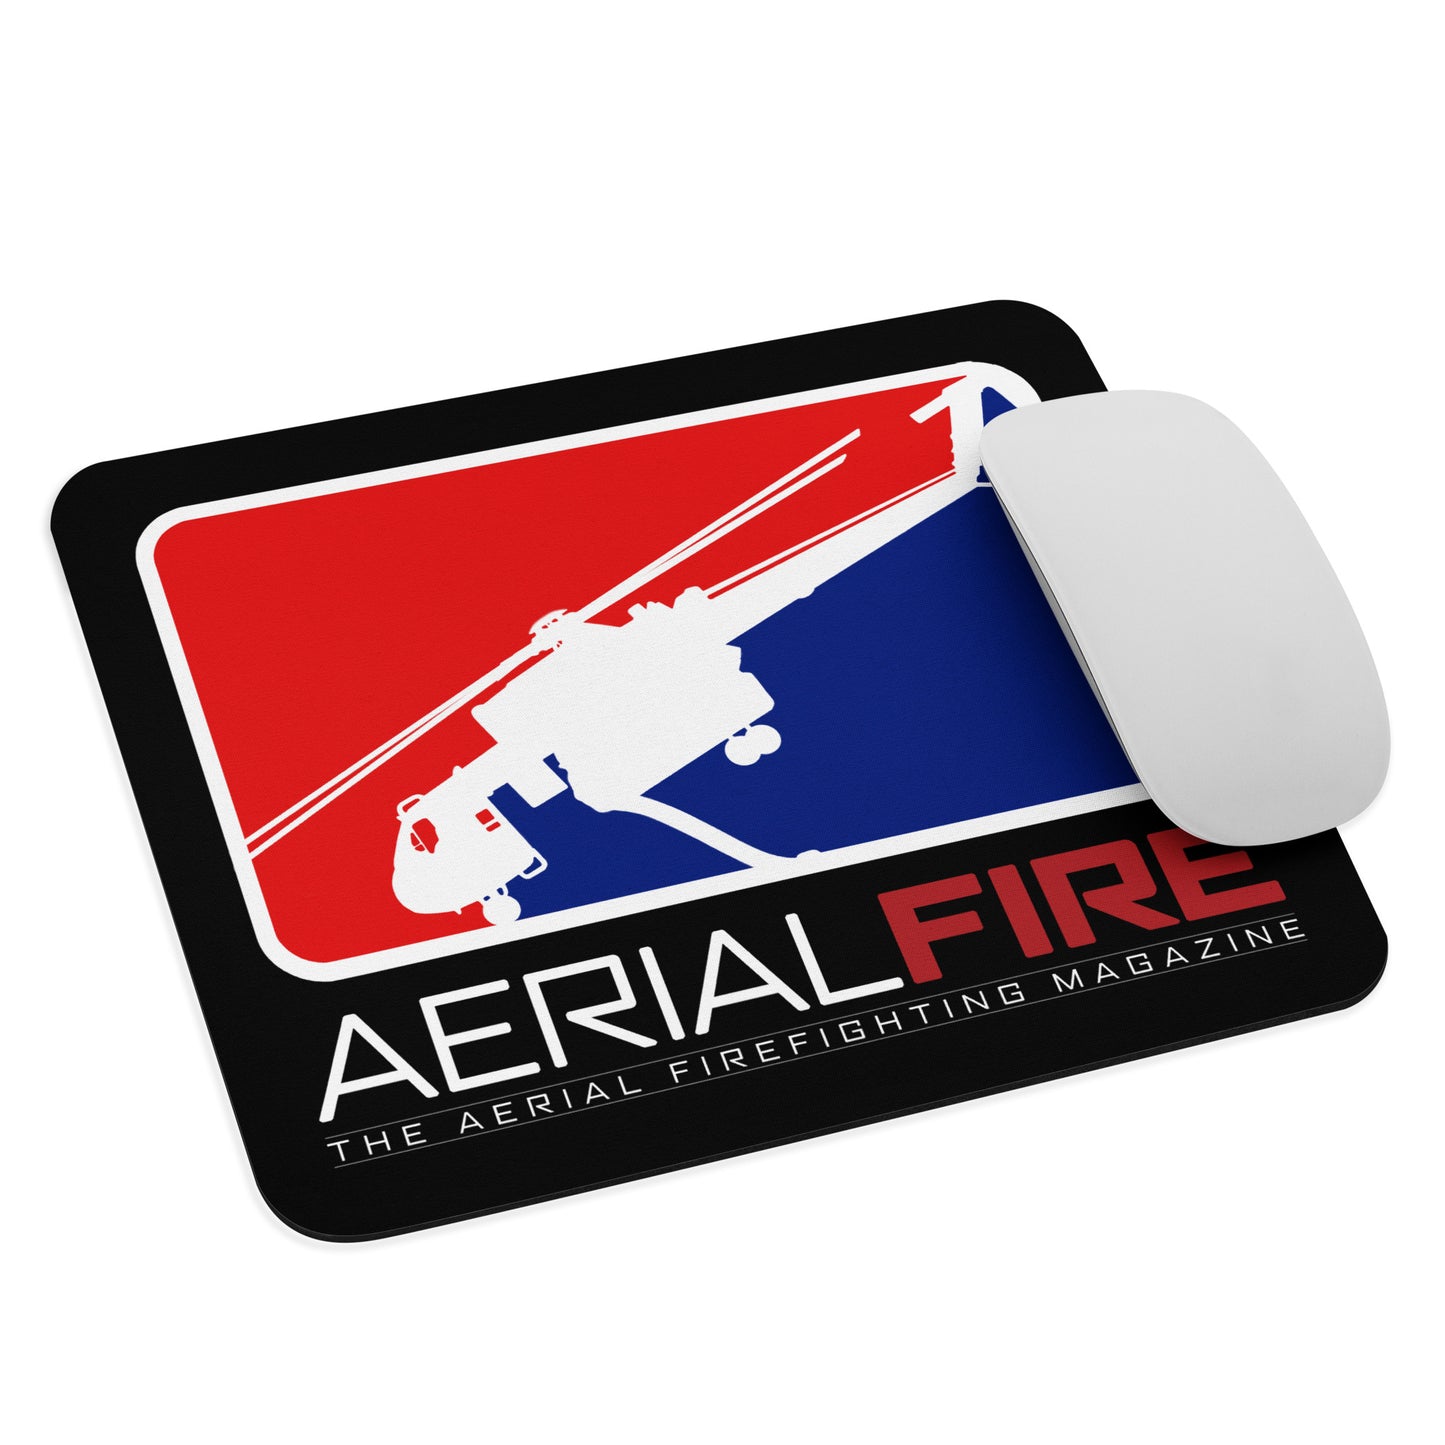 AerialFire S64 Mouse pad